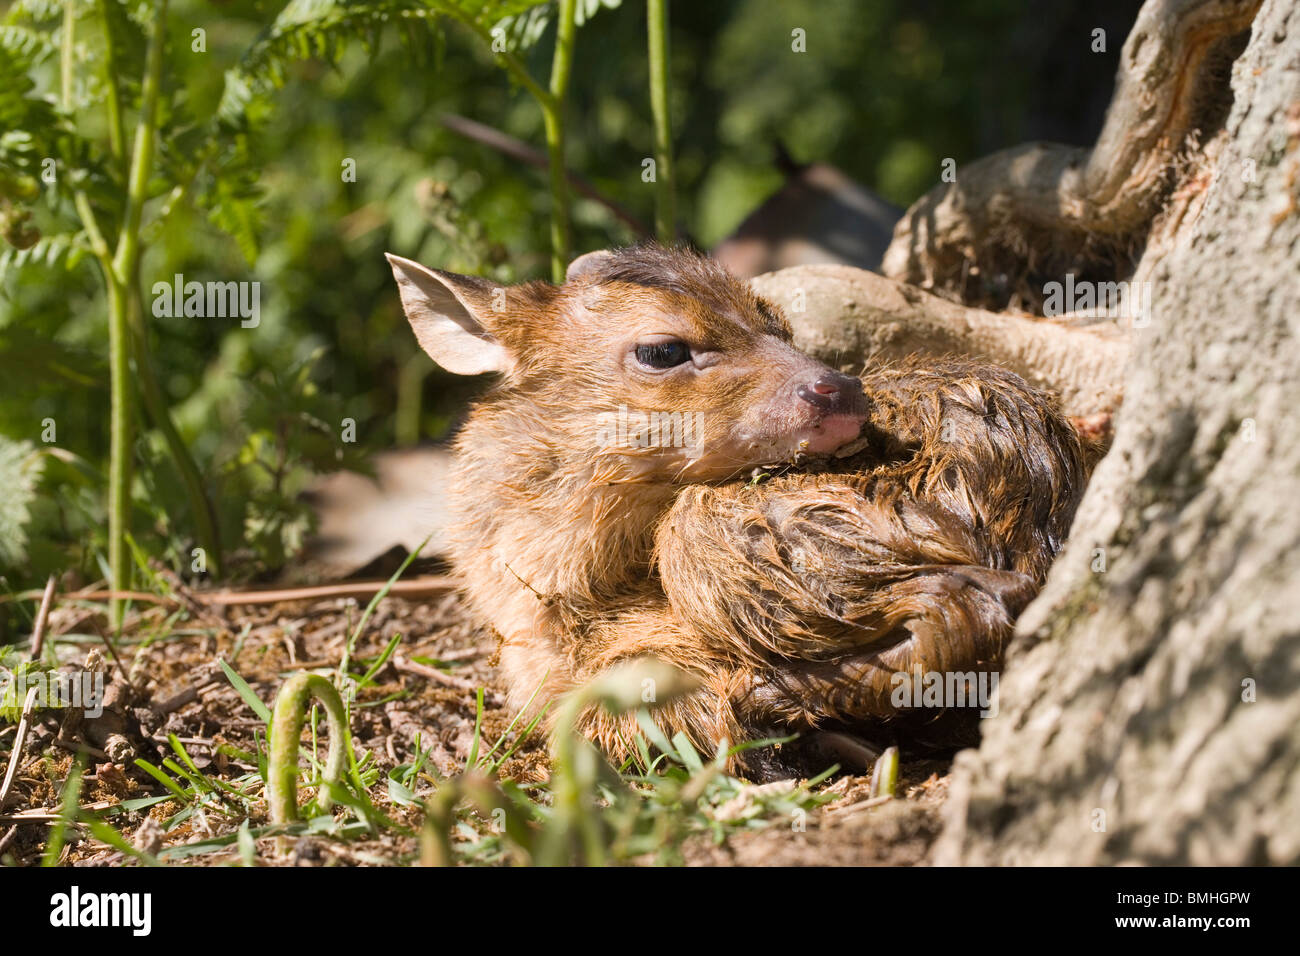 Muntjac Deer (Muntiacus reevesi). Fawn, just born. 'Dropped' amongst bracken. Spring. June. Norfolk. England. Stock Photo